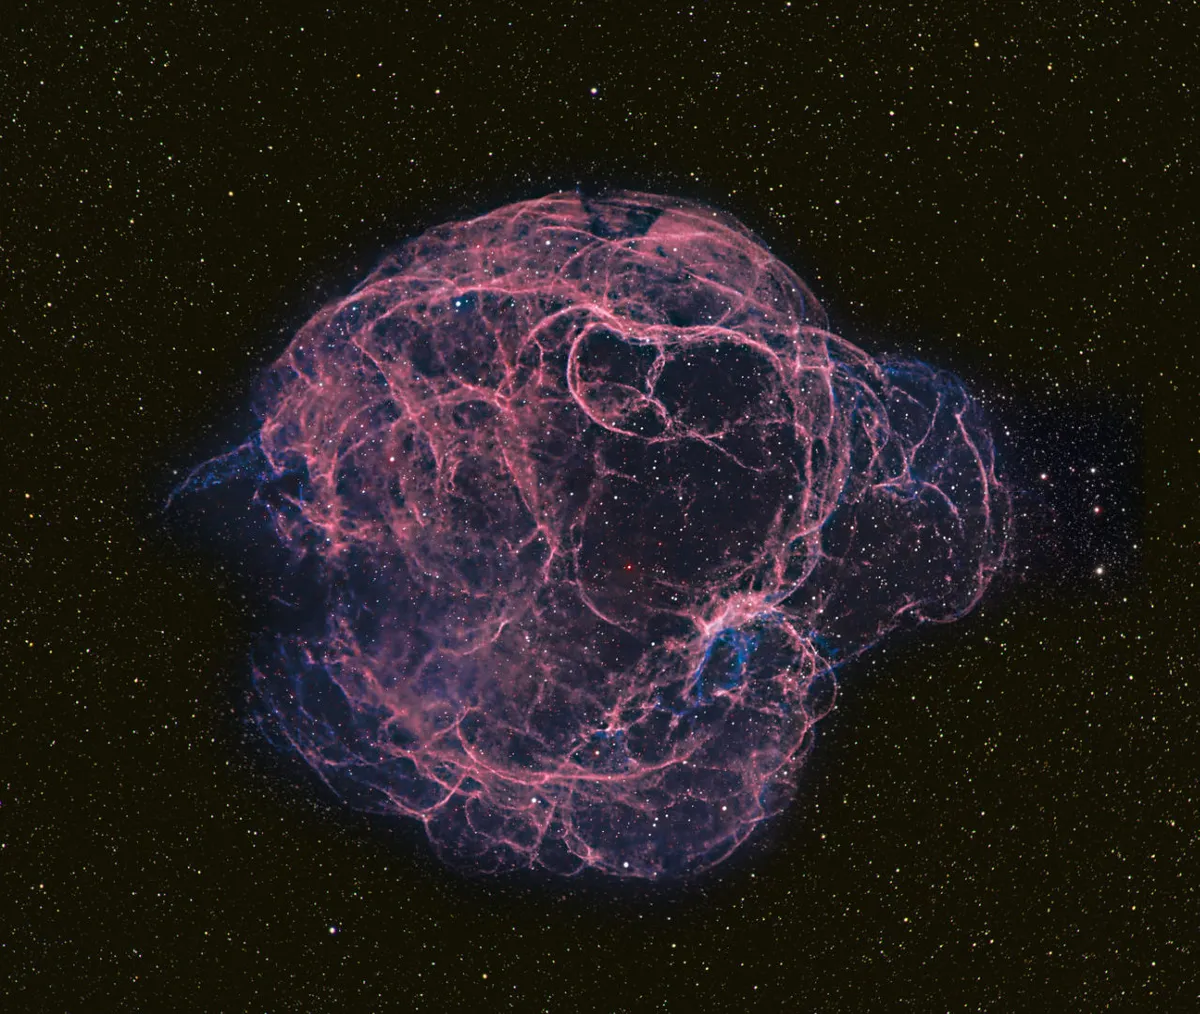 The Spaghetti Nebula, Michael P. Caligiuri, Anza Borrego Desert, California, 25-26 November 2022 Equipment: ZWO ASI 294 camera, Samyang 135mm f/1.8 lens at f/4, Astro-Physics AP1100 equatorial mount.